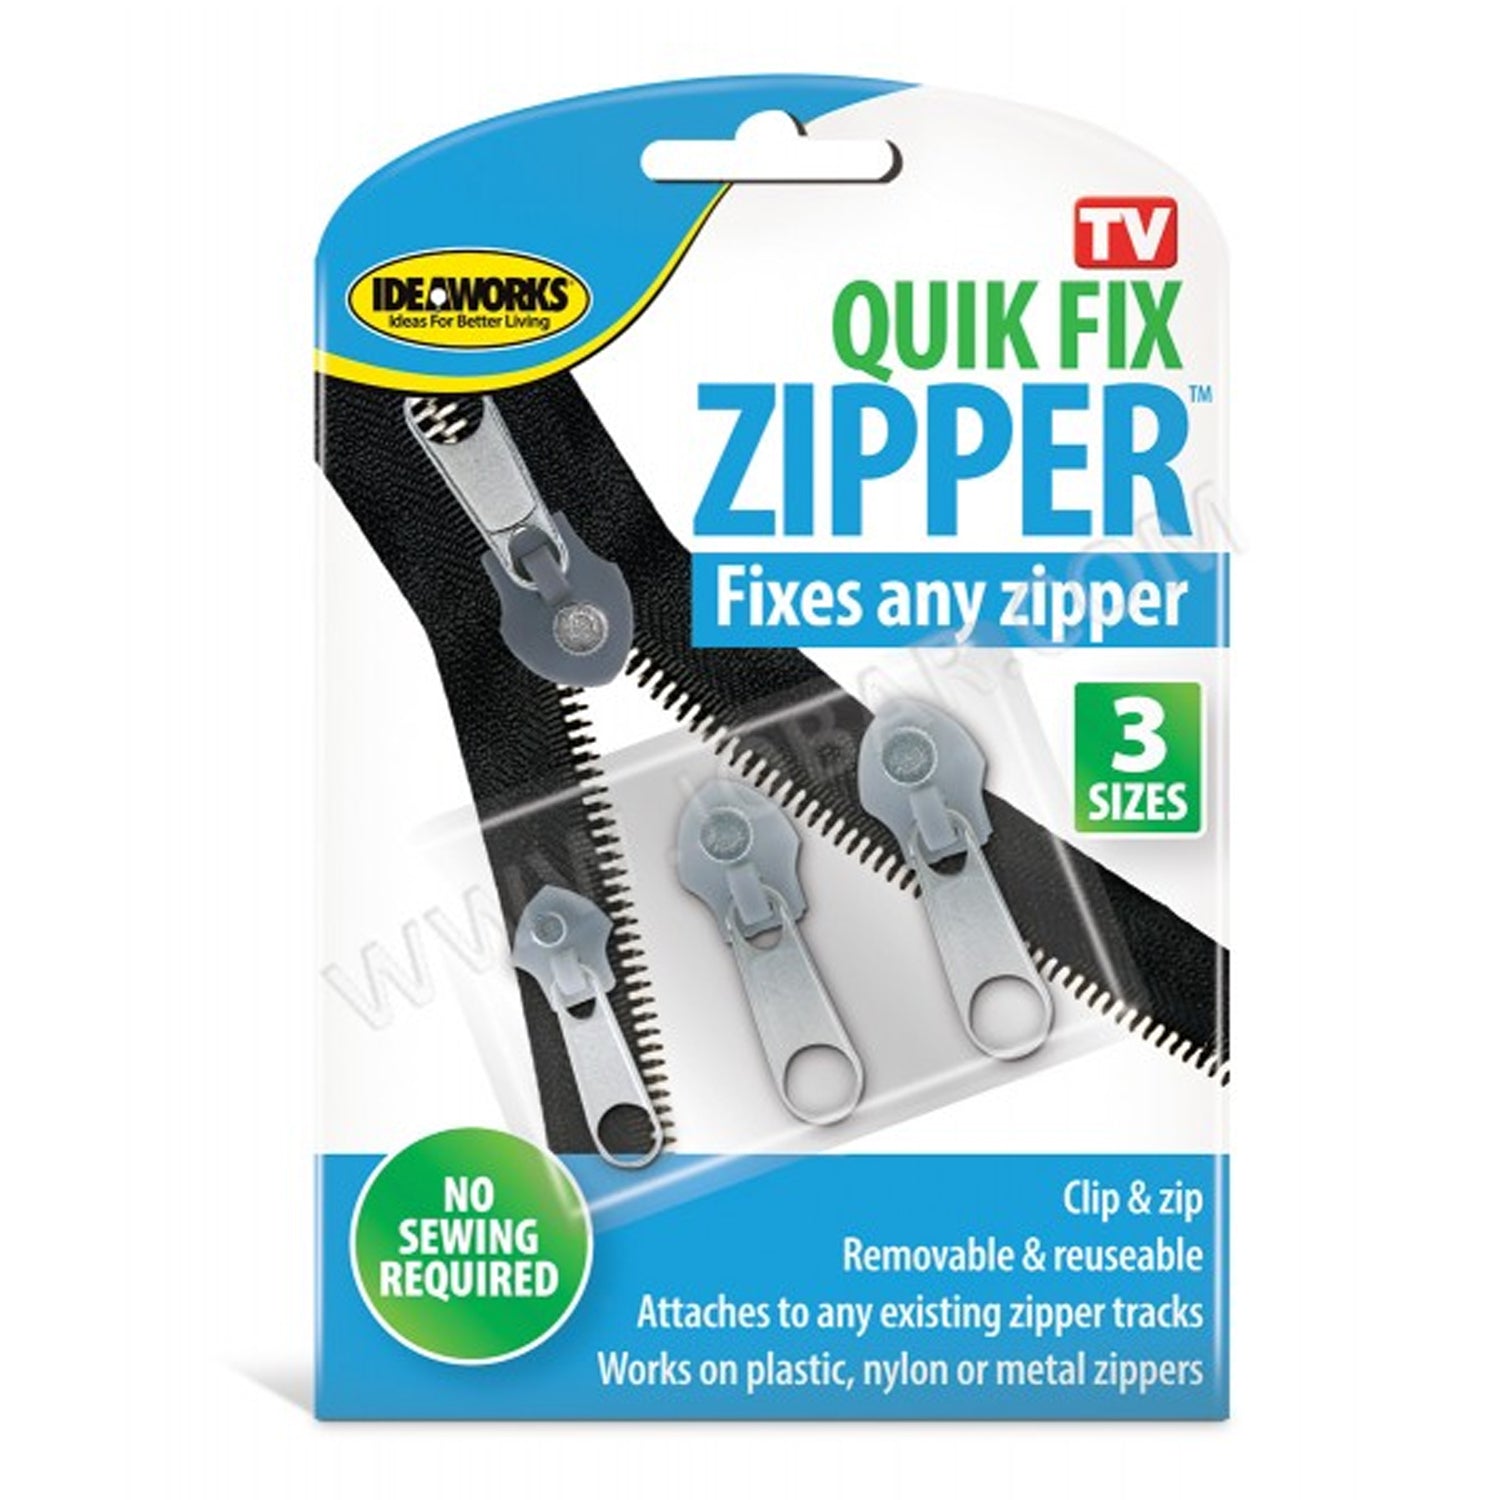 Qwik Fix Zipper Split Tracks Broken Sliders Any Zipper, Zb6380